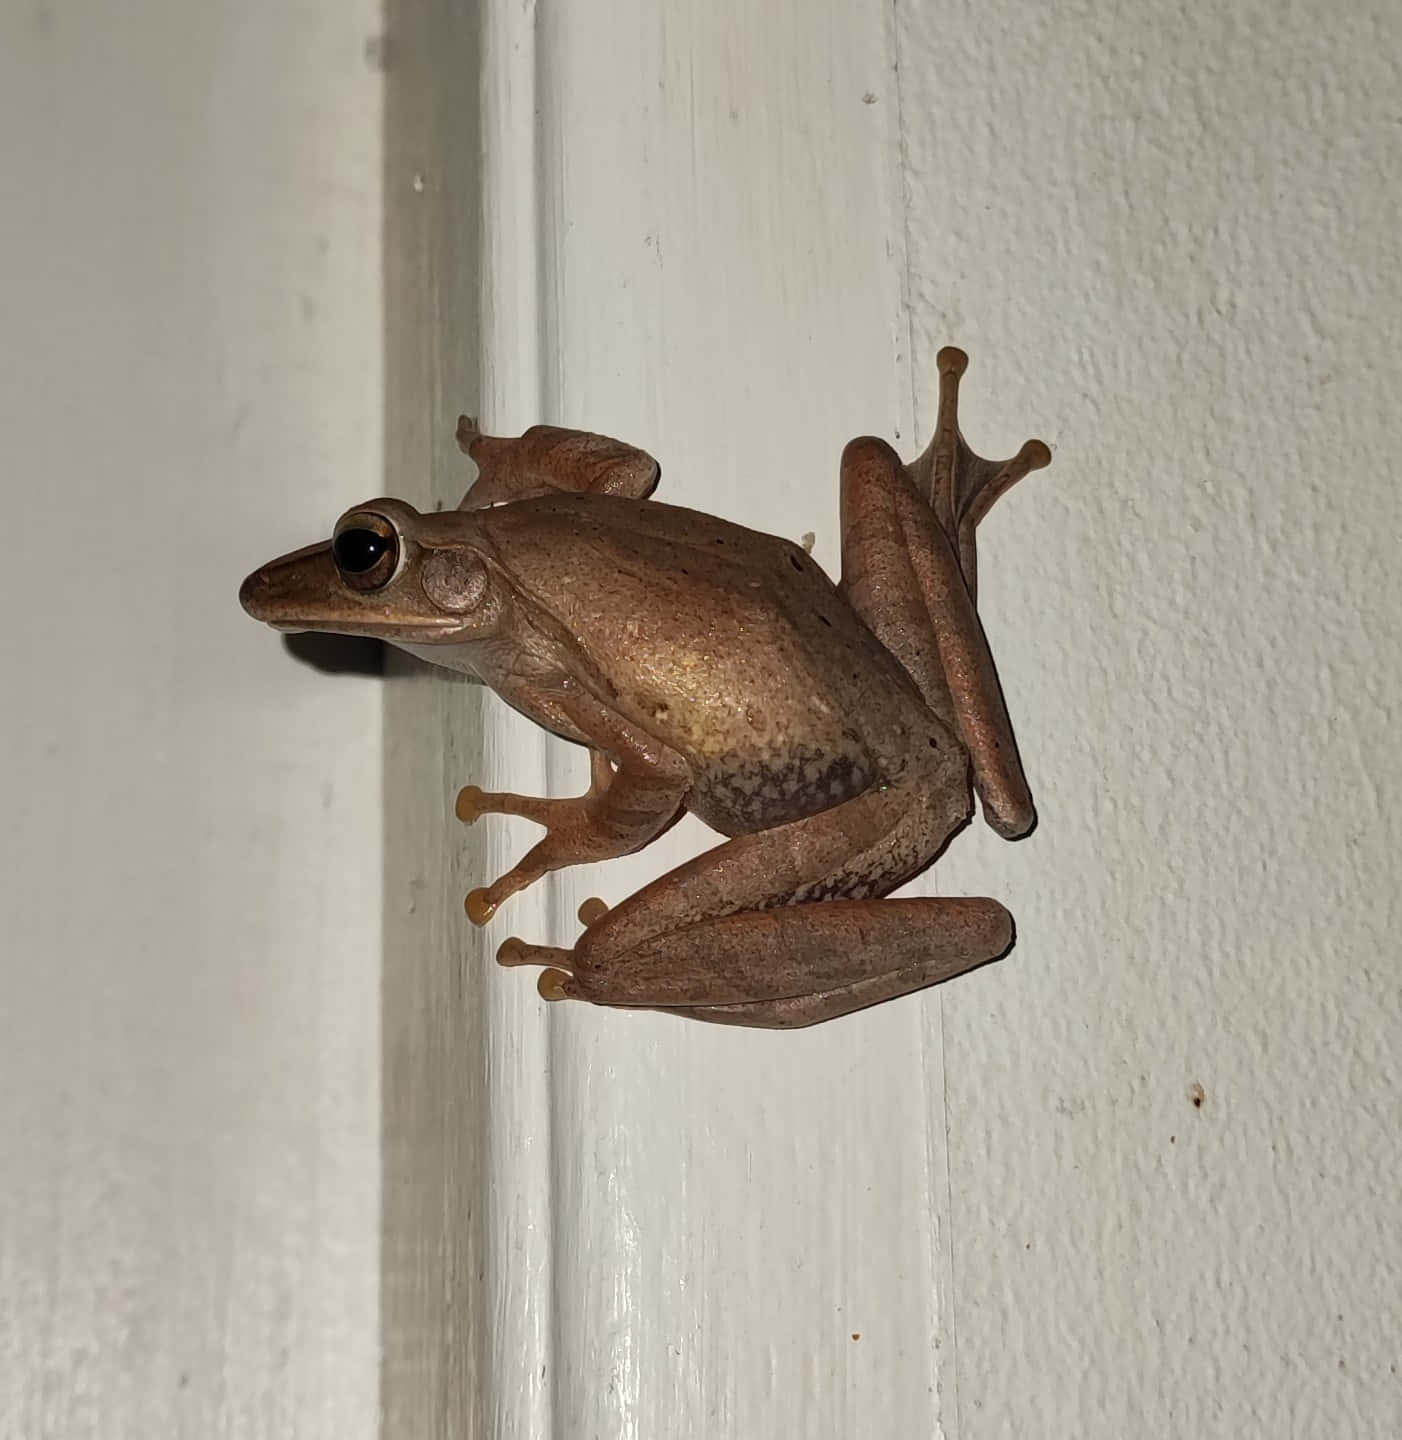 Brown Frog Clingingto Vertical Surface Wallpaper